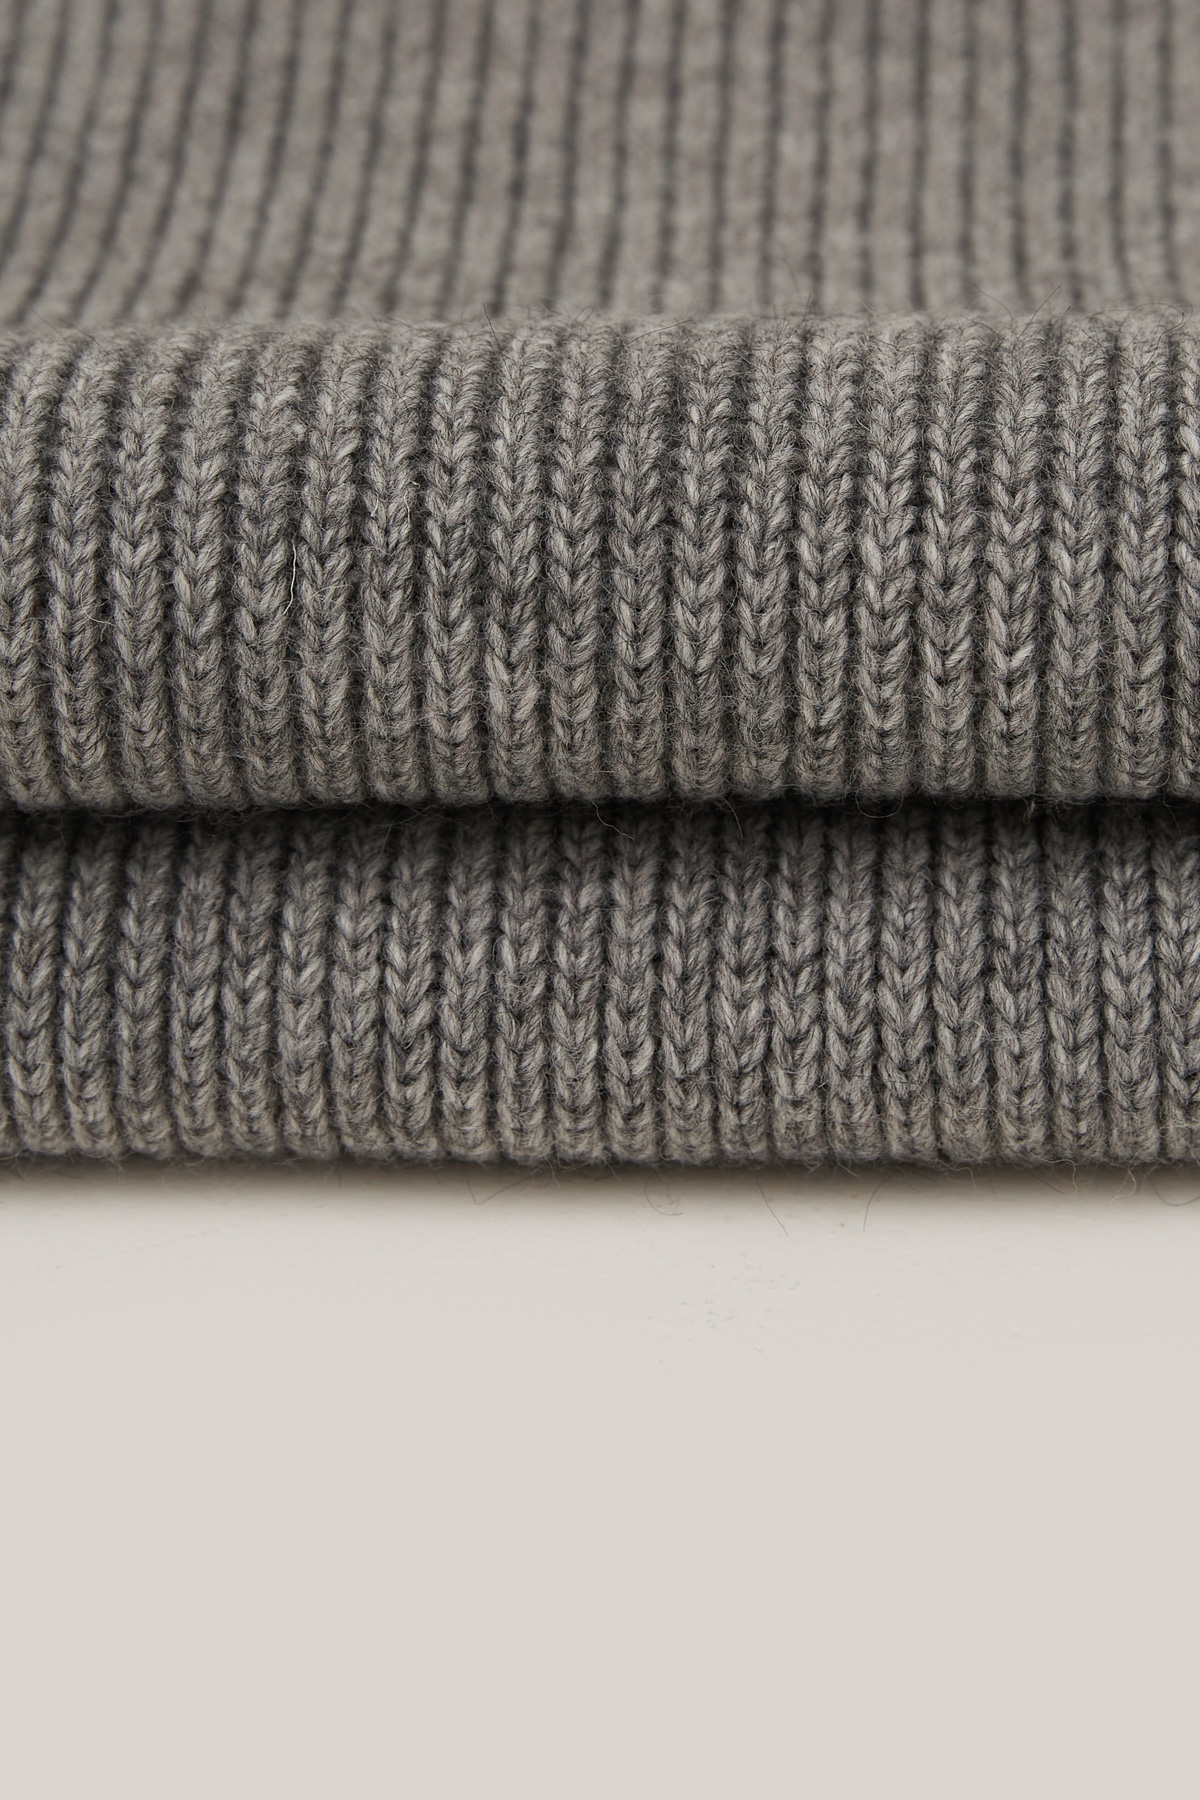 Knitted woolen grey scarf, photo 5